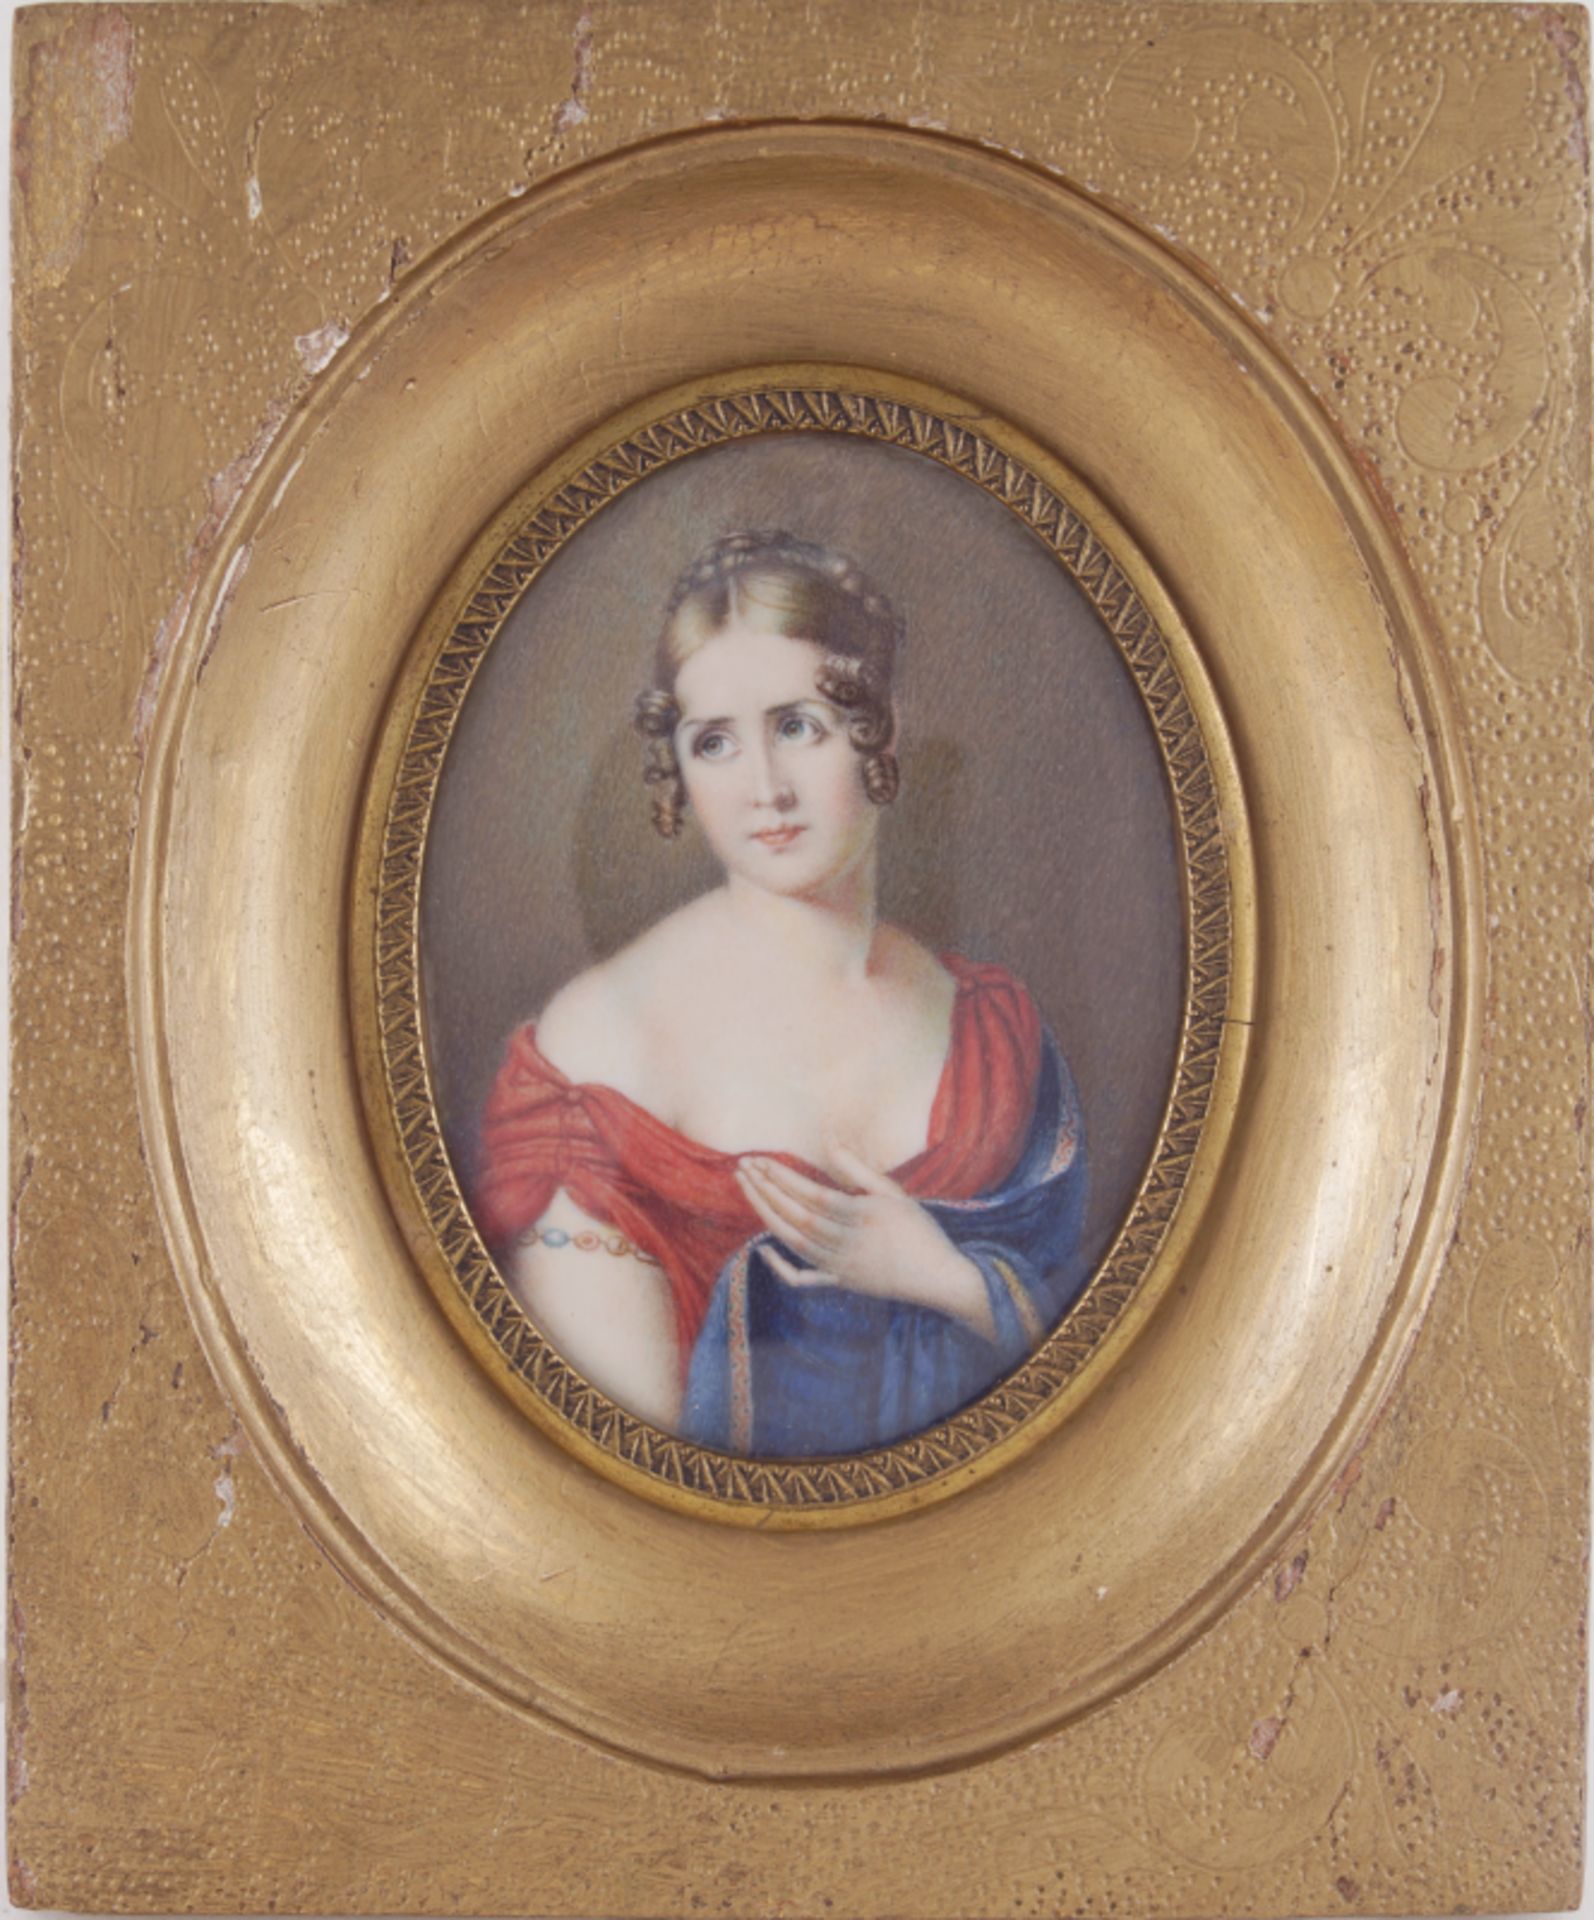 Miniaturbildchen, Paolina Borghese, 19.Jh.